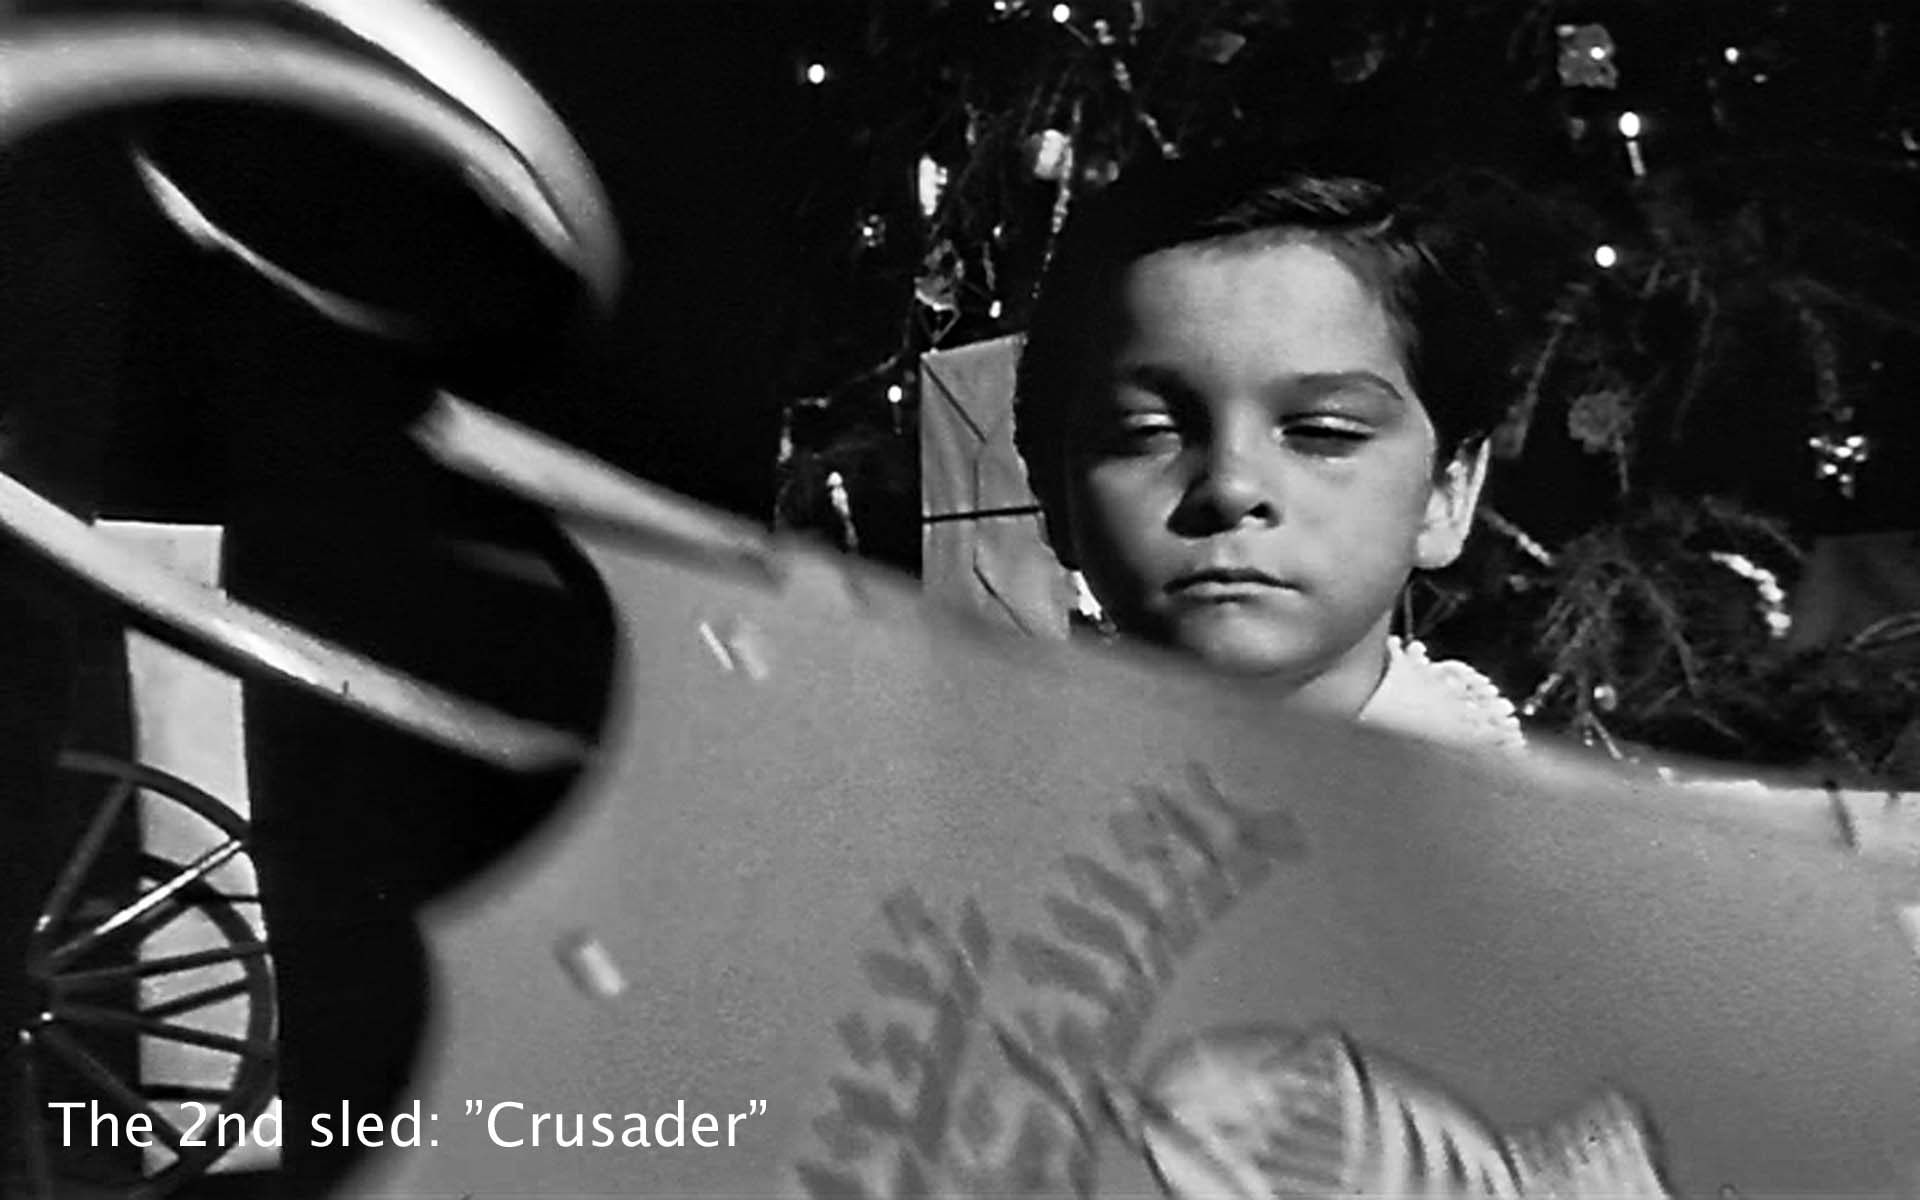 Rosebud sled from 'Citizen Kane' called one of film's most